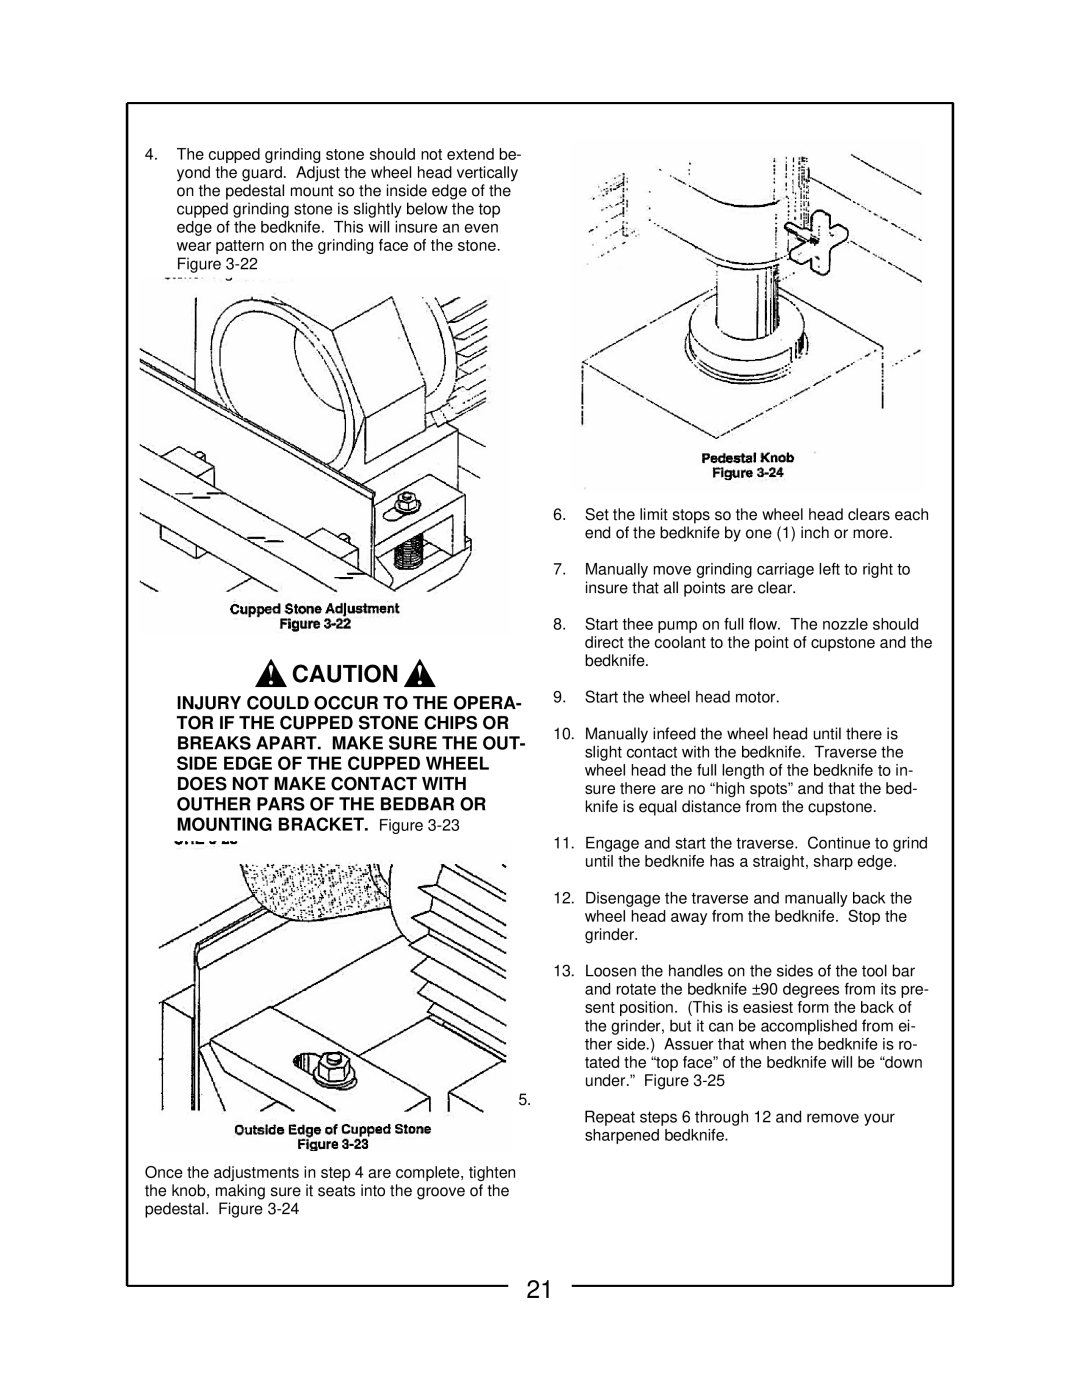 Locke RS-5100 manual Start the wheel head motor 